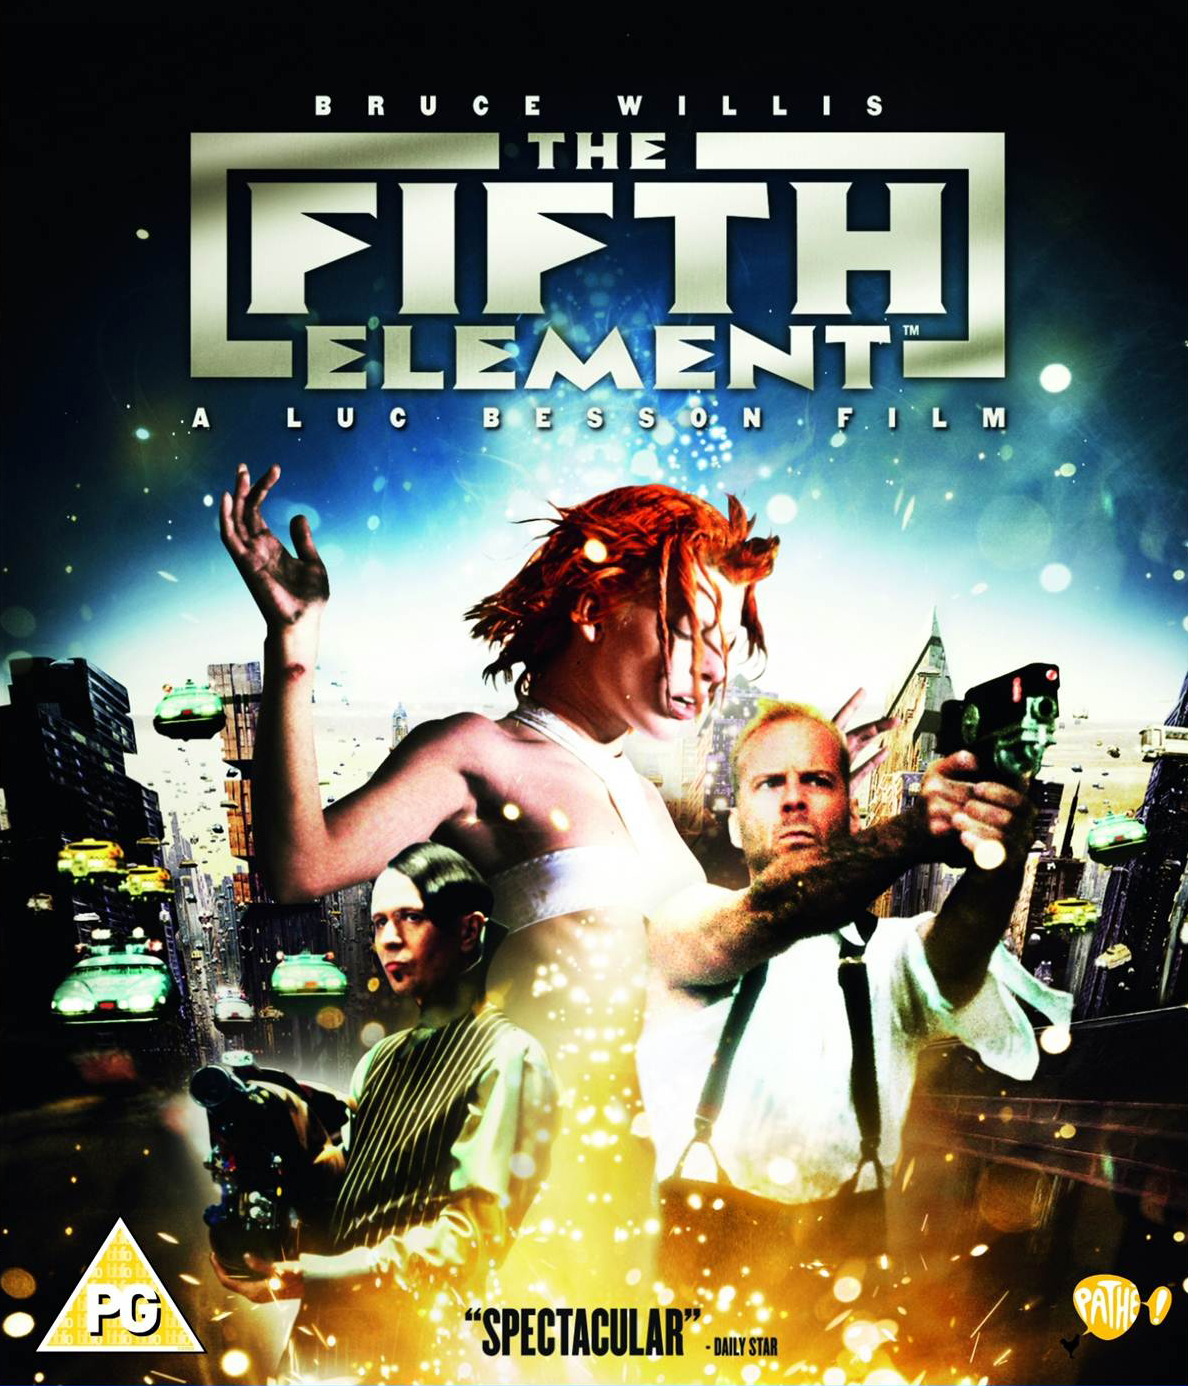 5 элементный. The Fifth element 1997 Постер. Пятый элемент 1997 Постер.